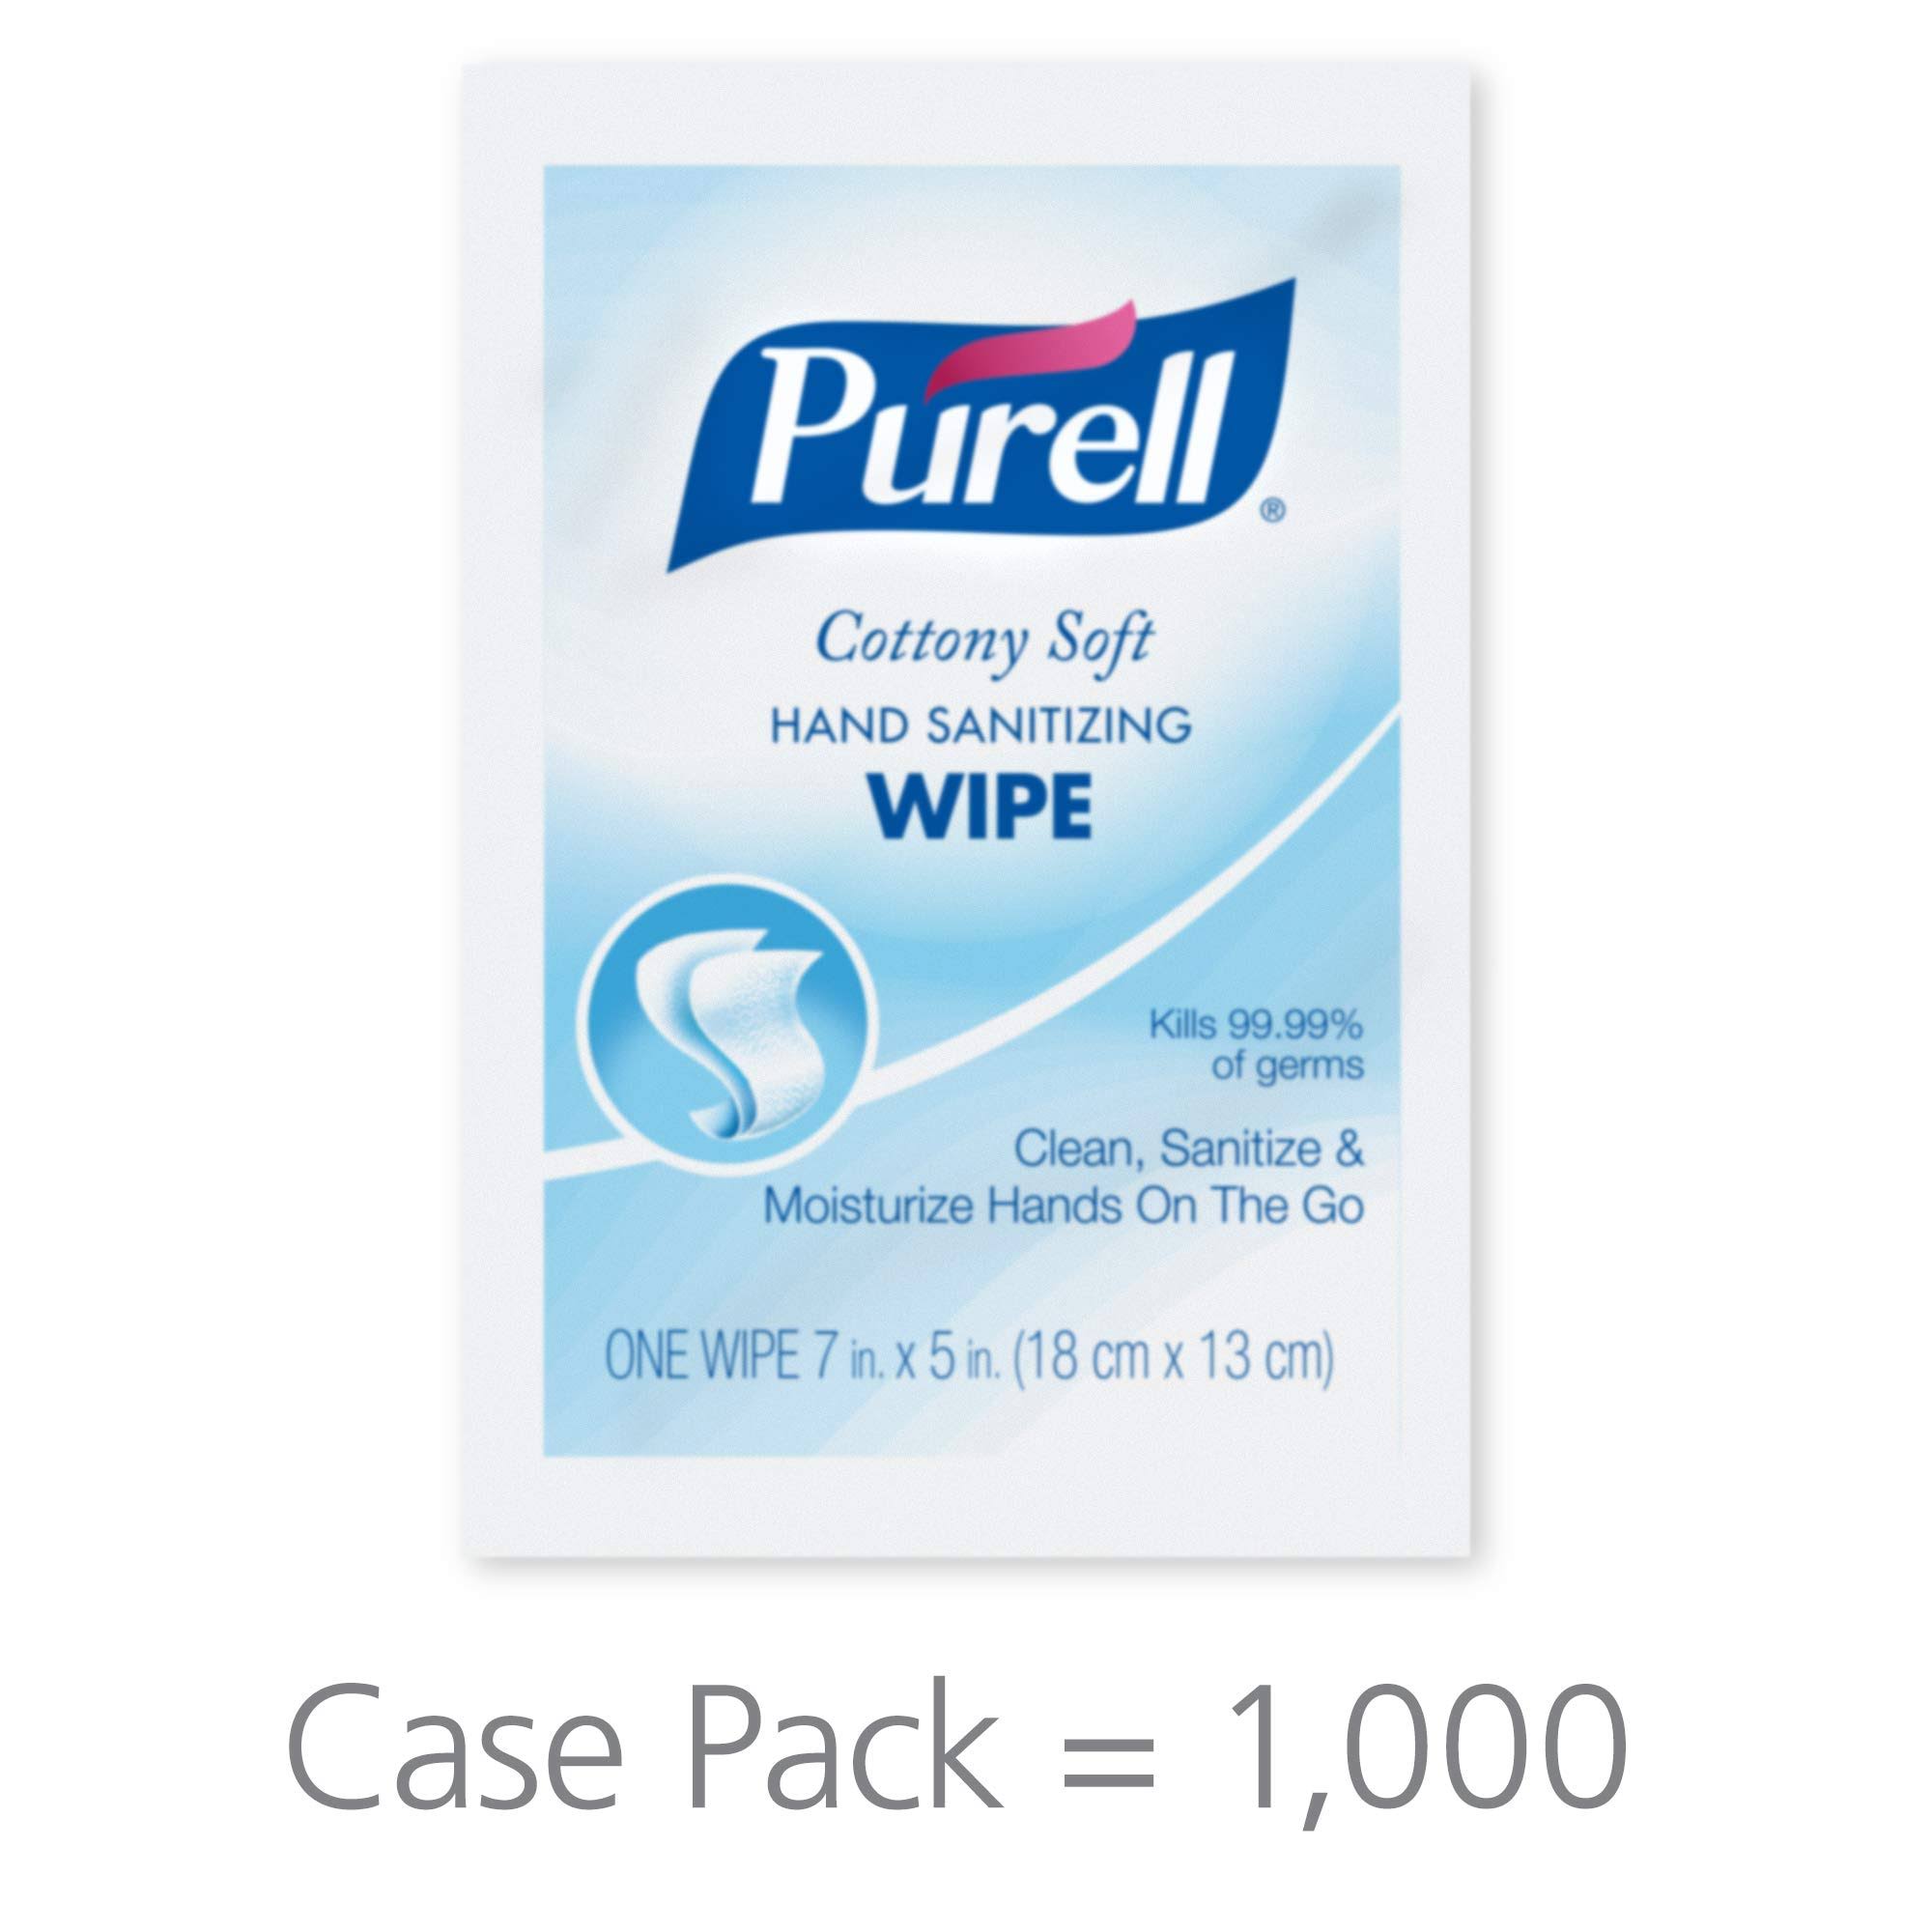 Purell Cottony Soft Sanitizing Wipes - 1000ct, White